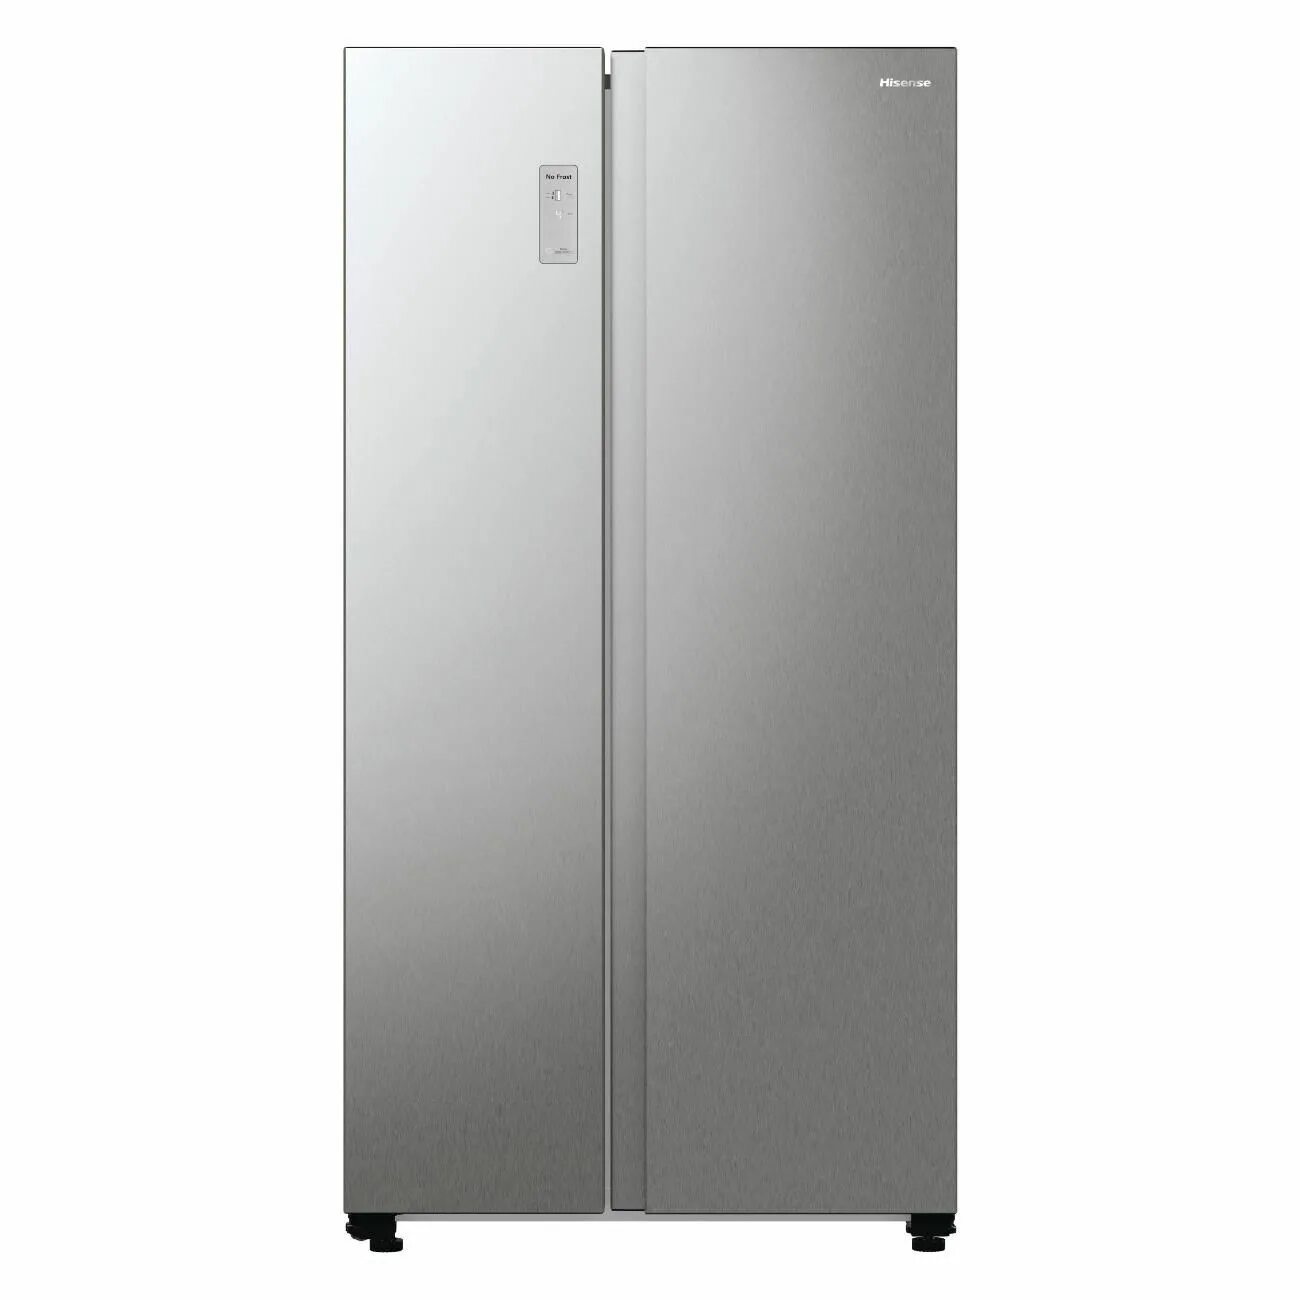 Холодильник side by side gorenje. Холодильник Gorenje nrr9185eaxl. Холодильник (Side-by-Side) Hisense rs711n4afe. Hisense rs677n4aw1. Gorenje холодильник nrr9185eabxl.